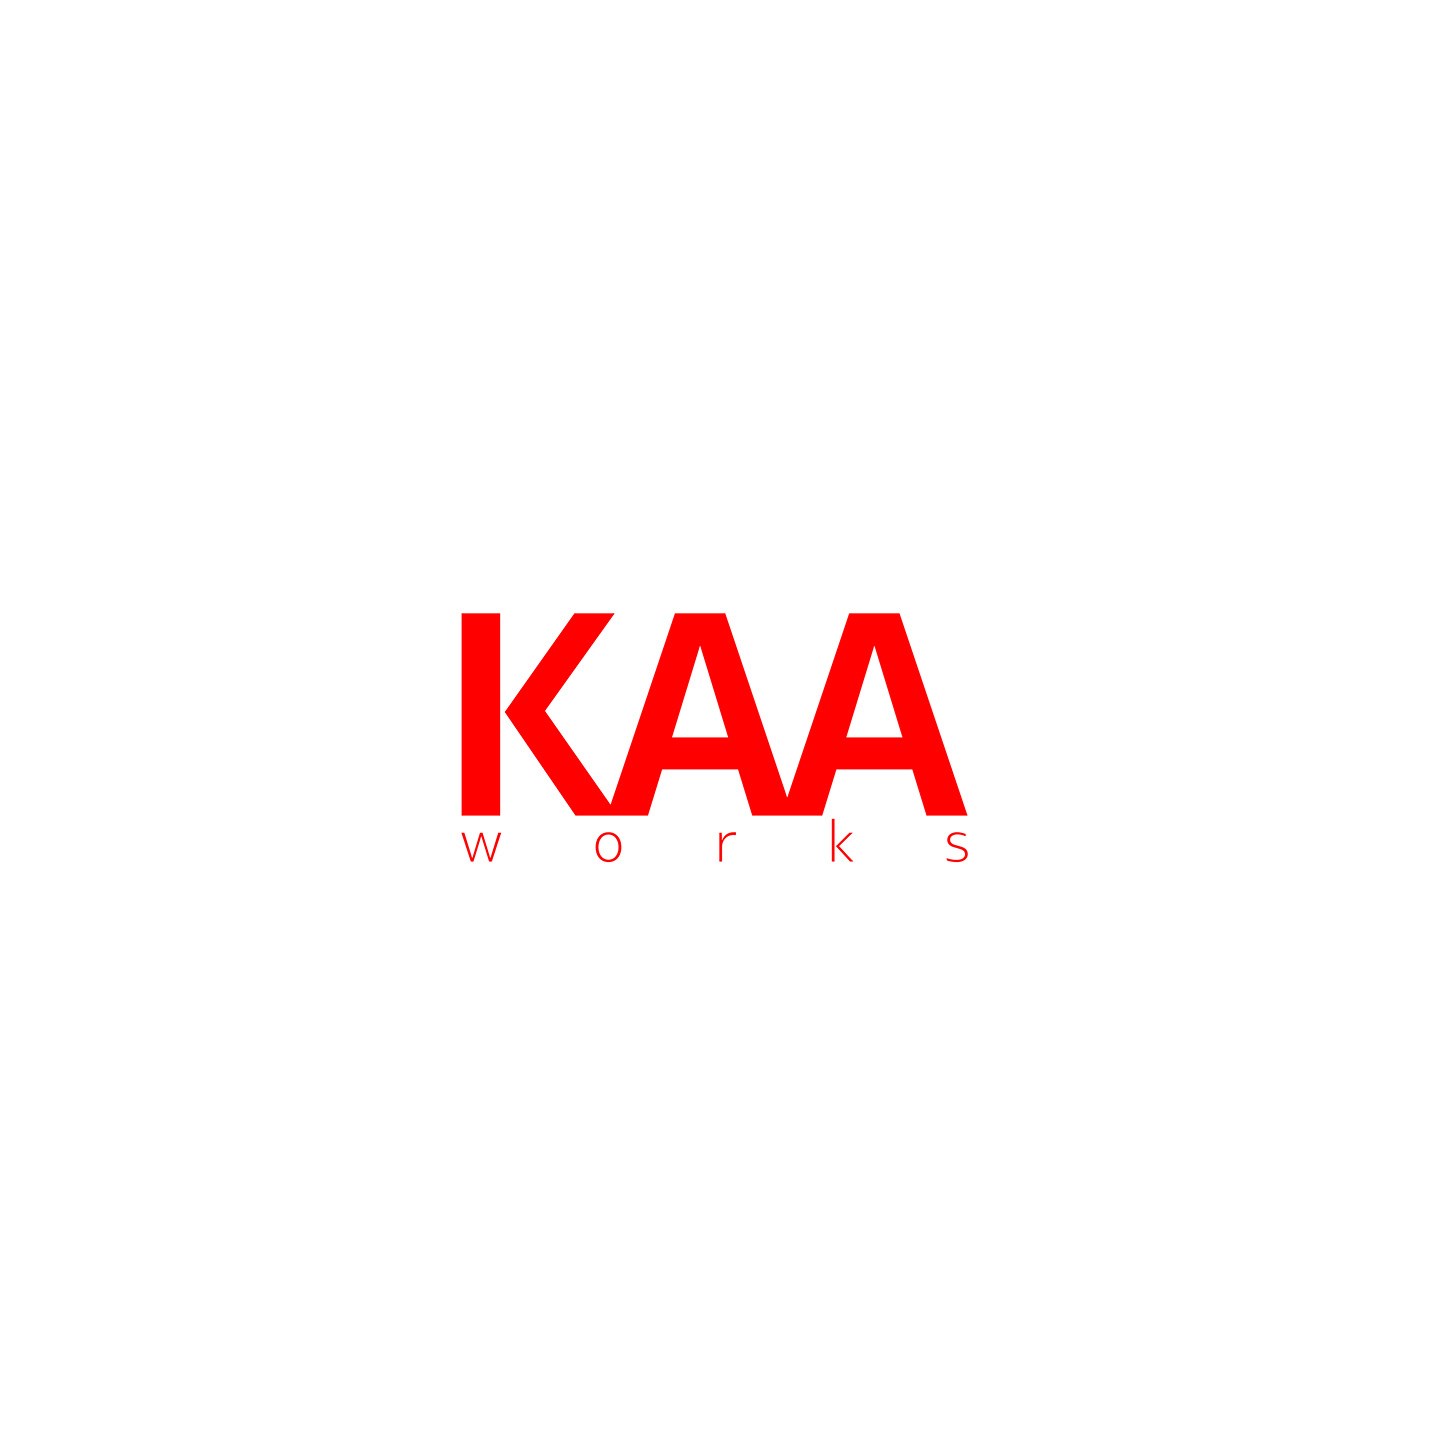 KAA Works